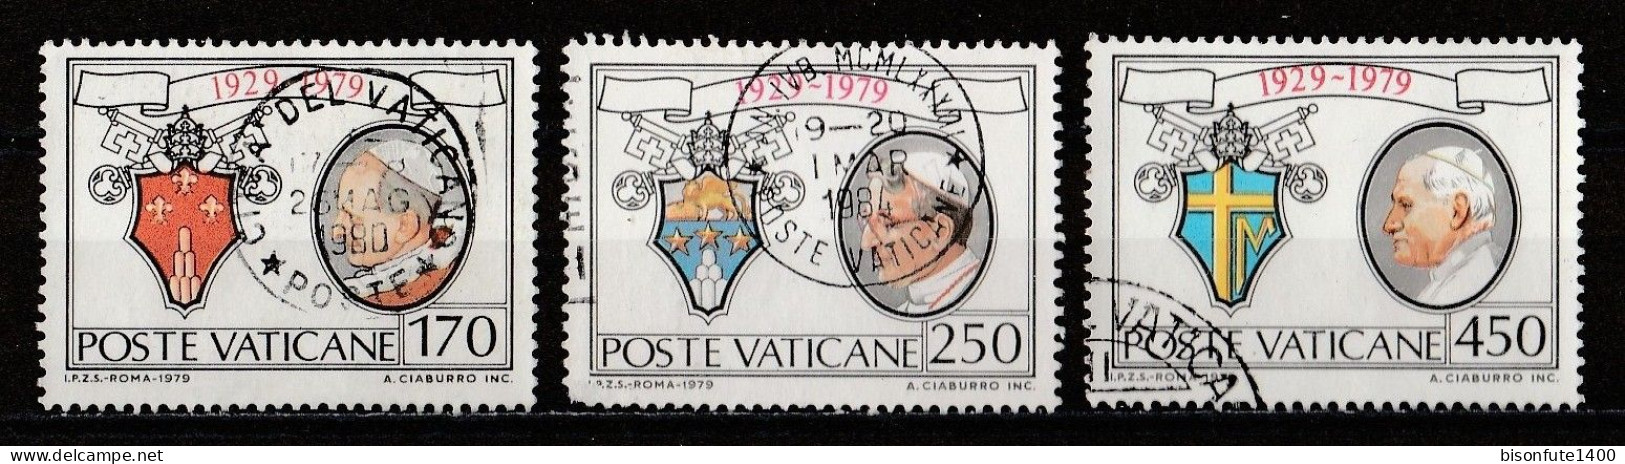 Vatican 1979 : Timbres Yvert & Tellier N° 678 - 679 - 680 - 681 - 682 - 683 Et 684 Oblitérés. - Gebraucht